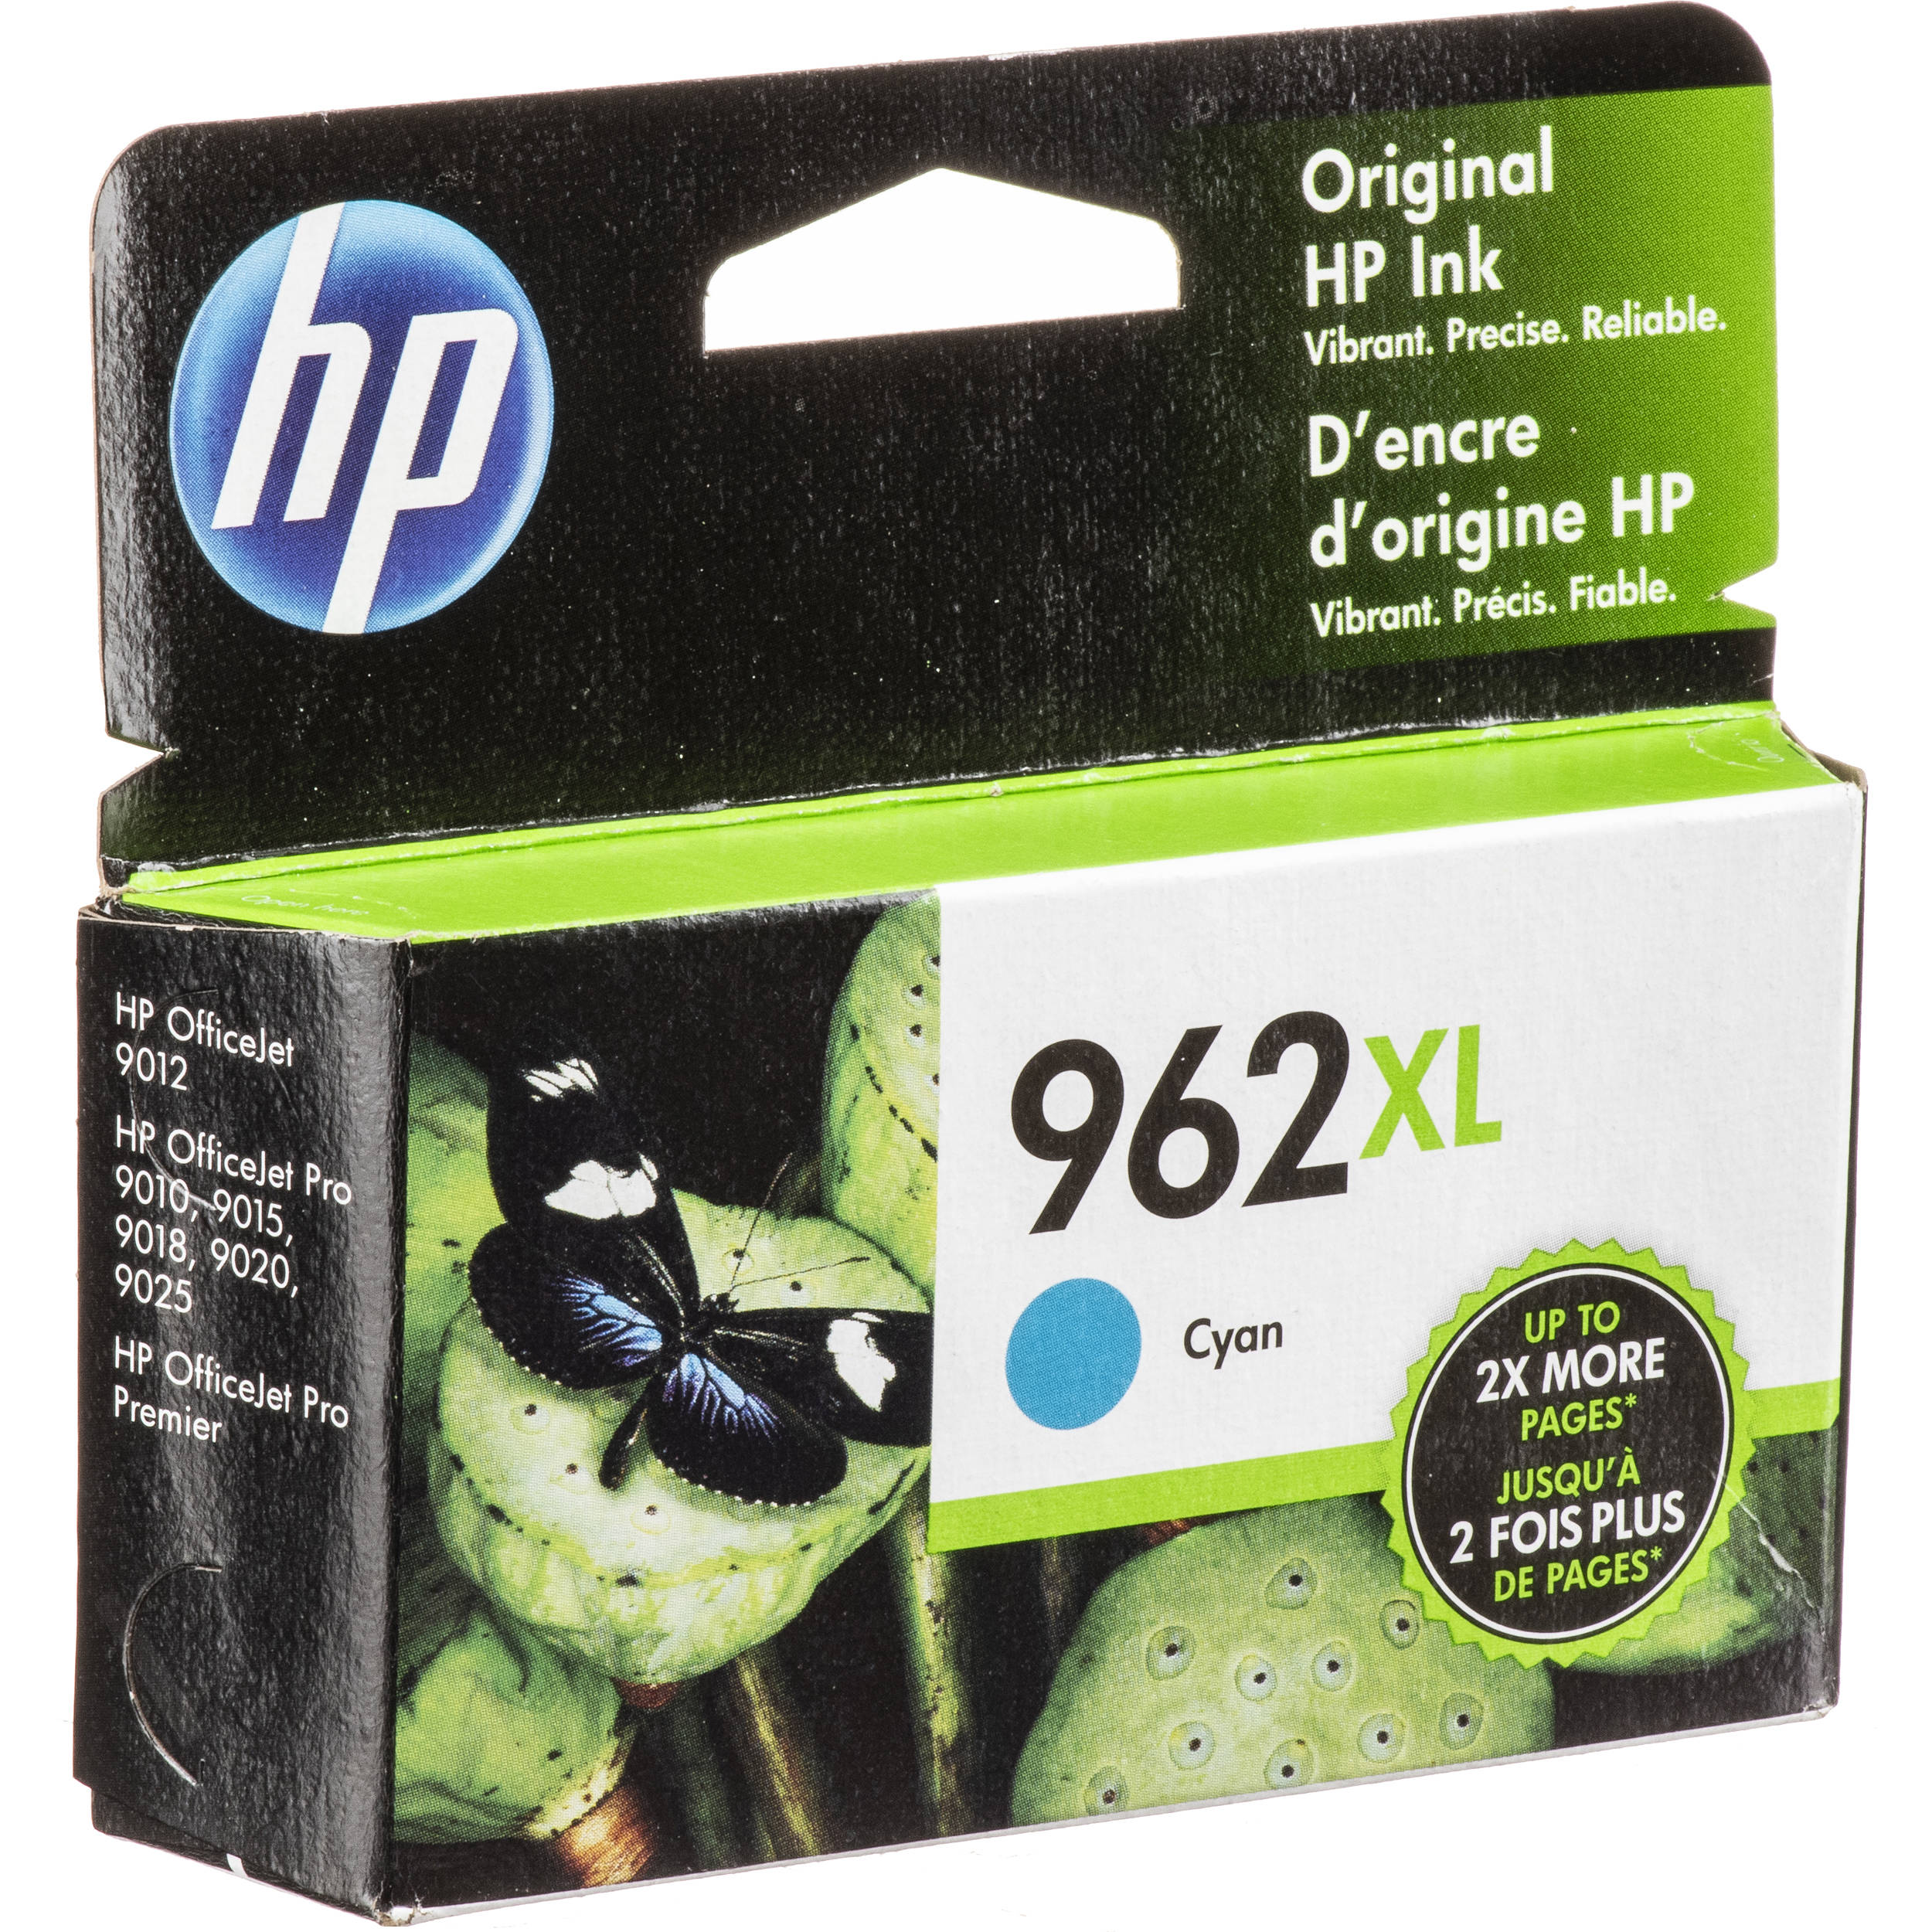 HP 962XL High Yield Cyan Original Ink Cartridge